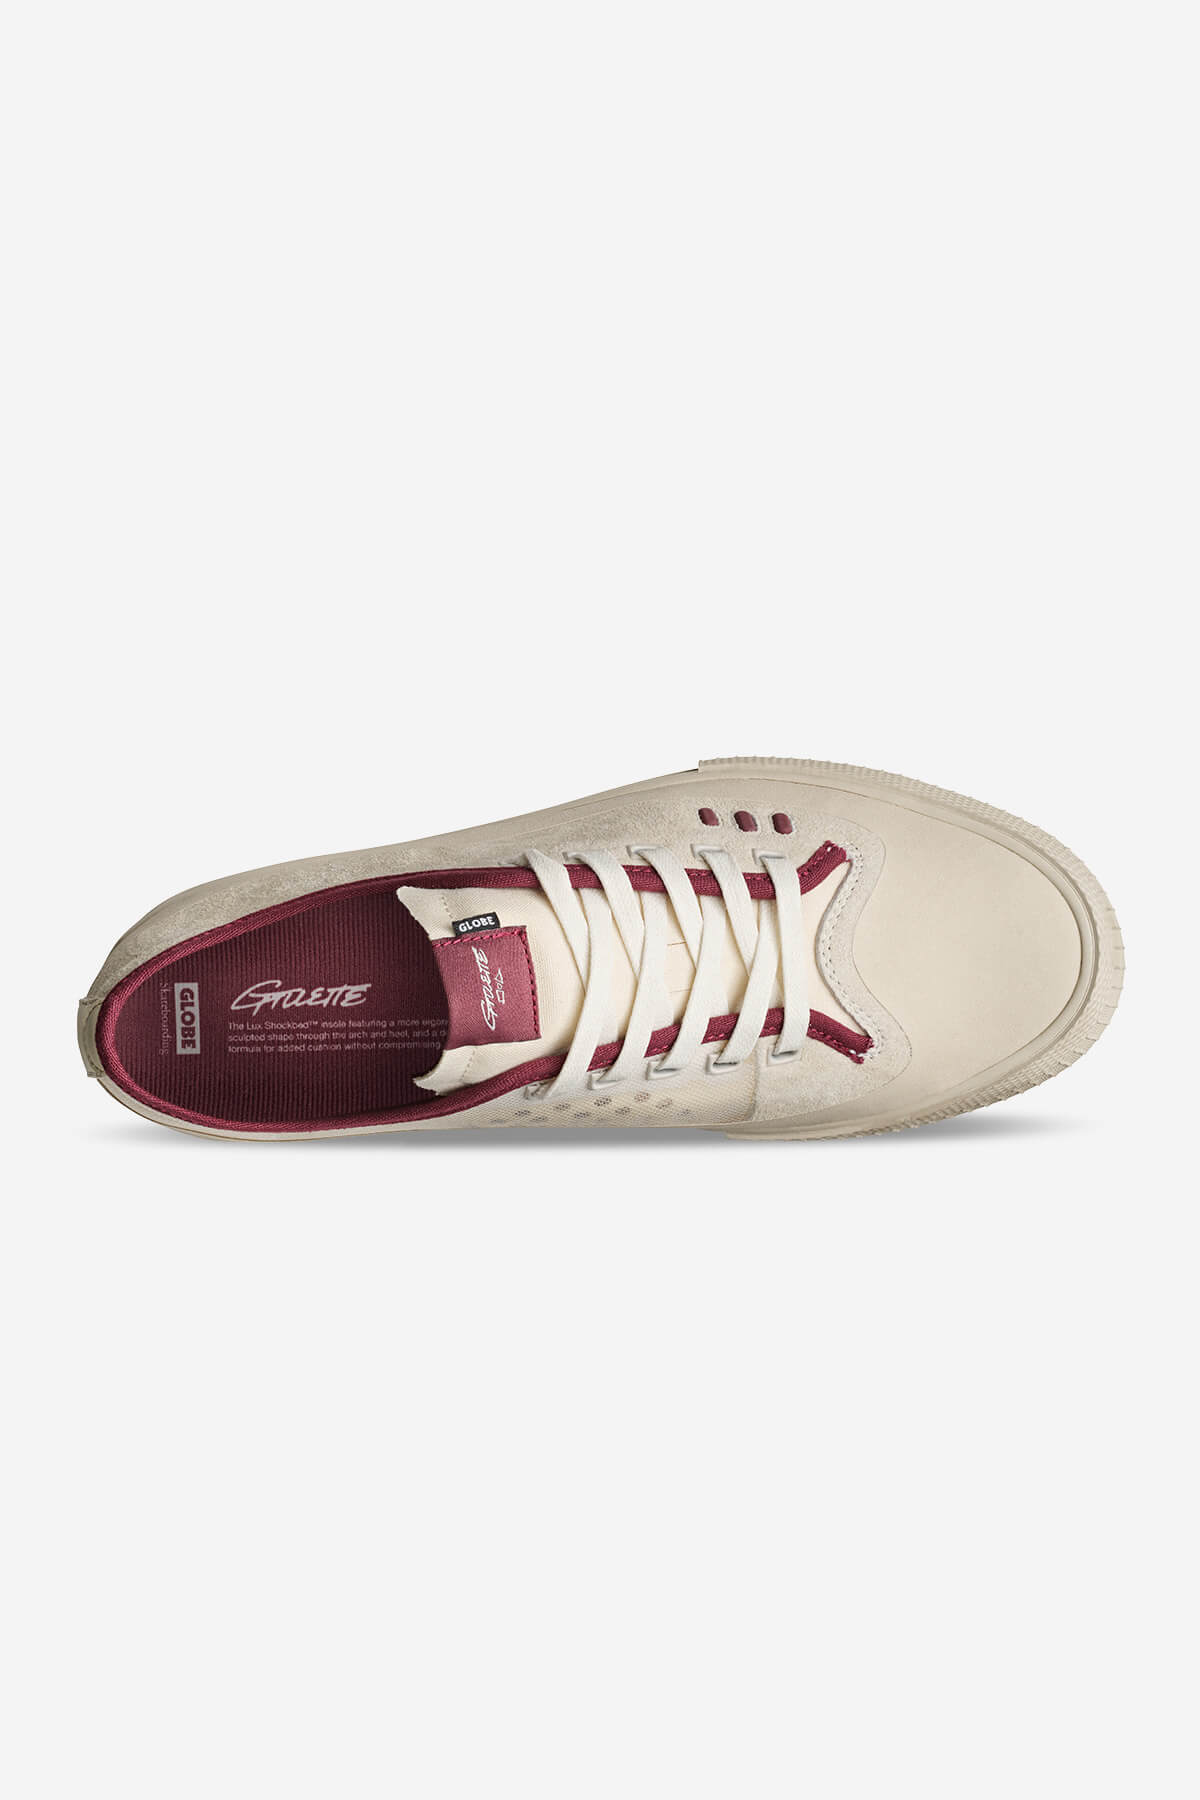 Globe - Gillette - Cream/Pomegranate - Skate Shoes